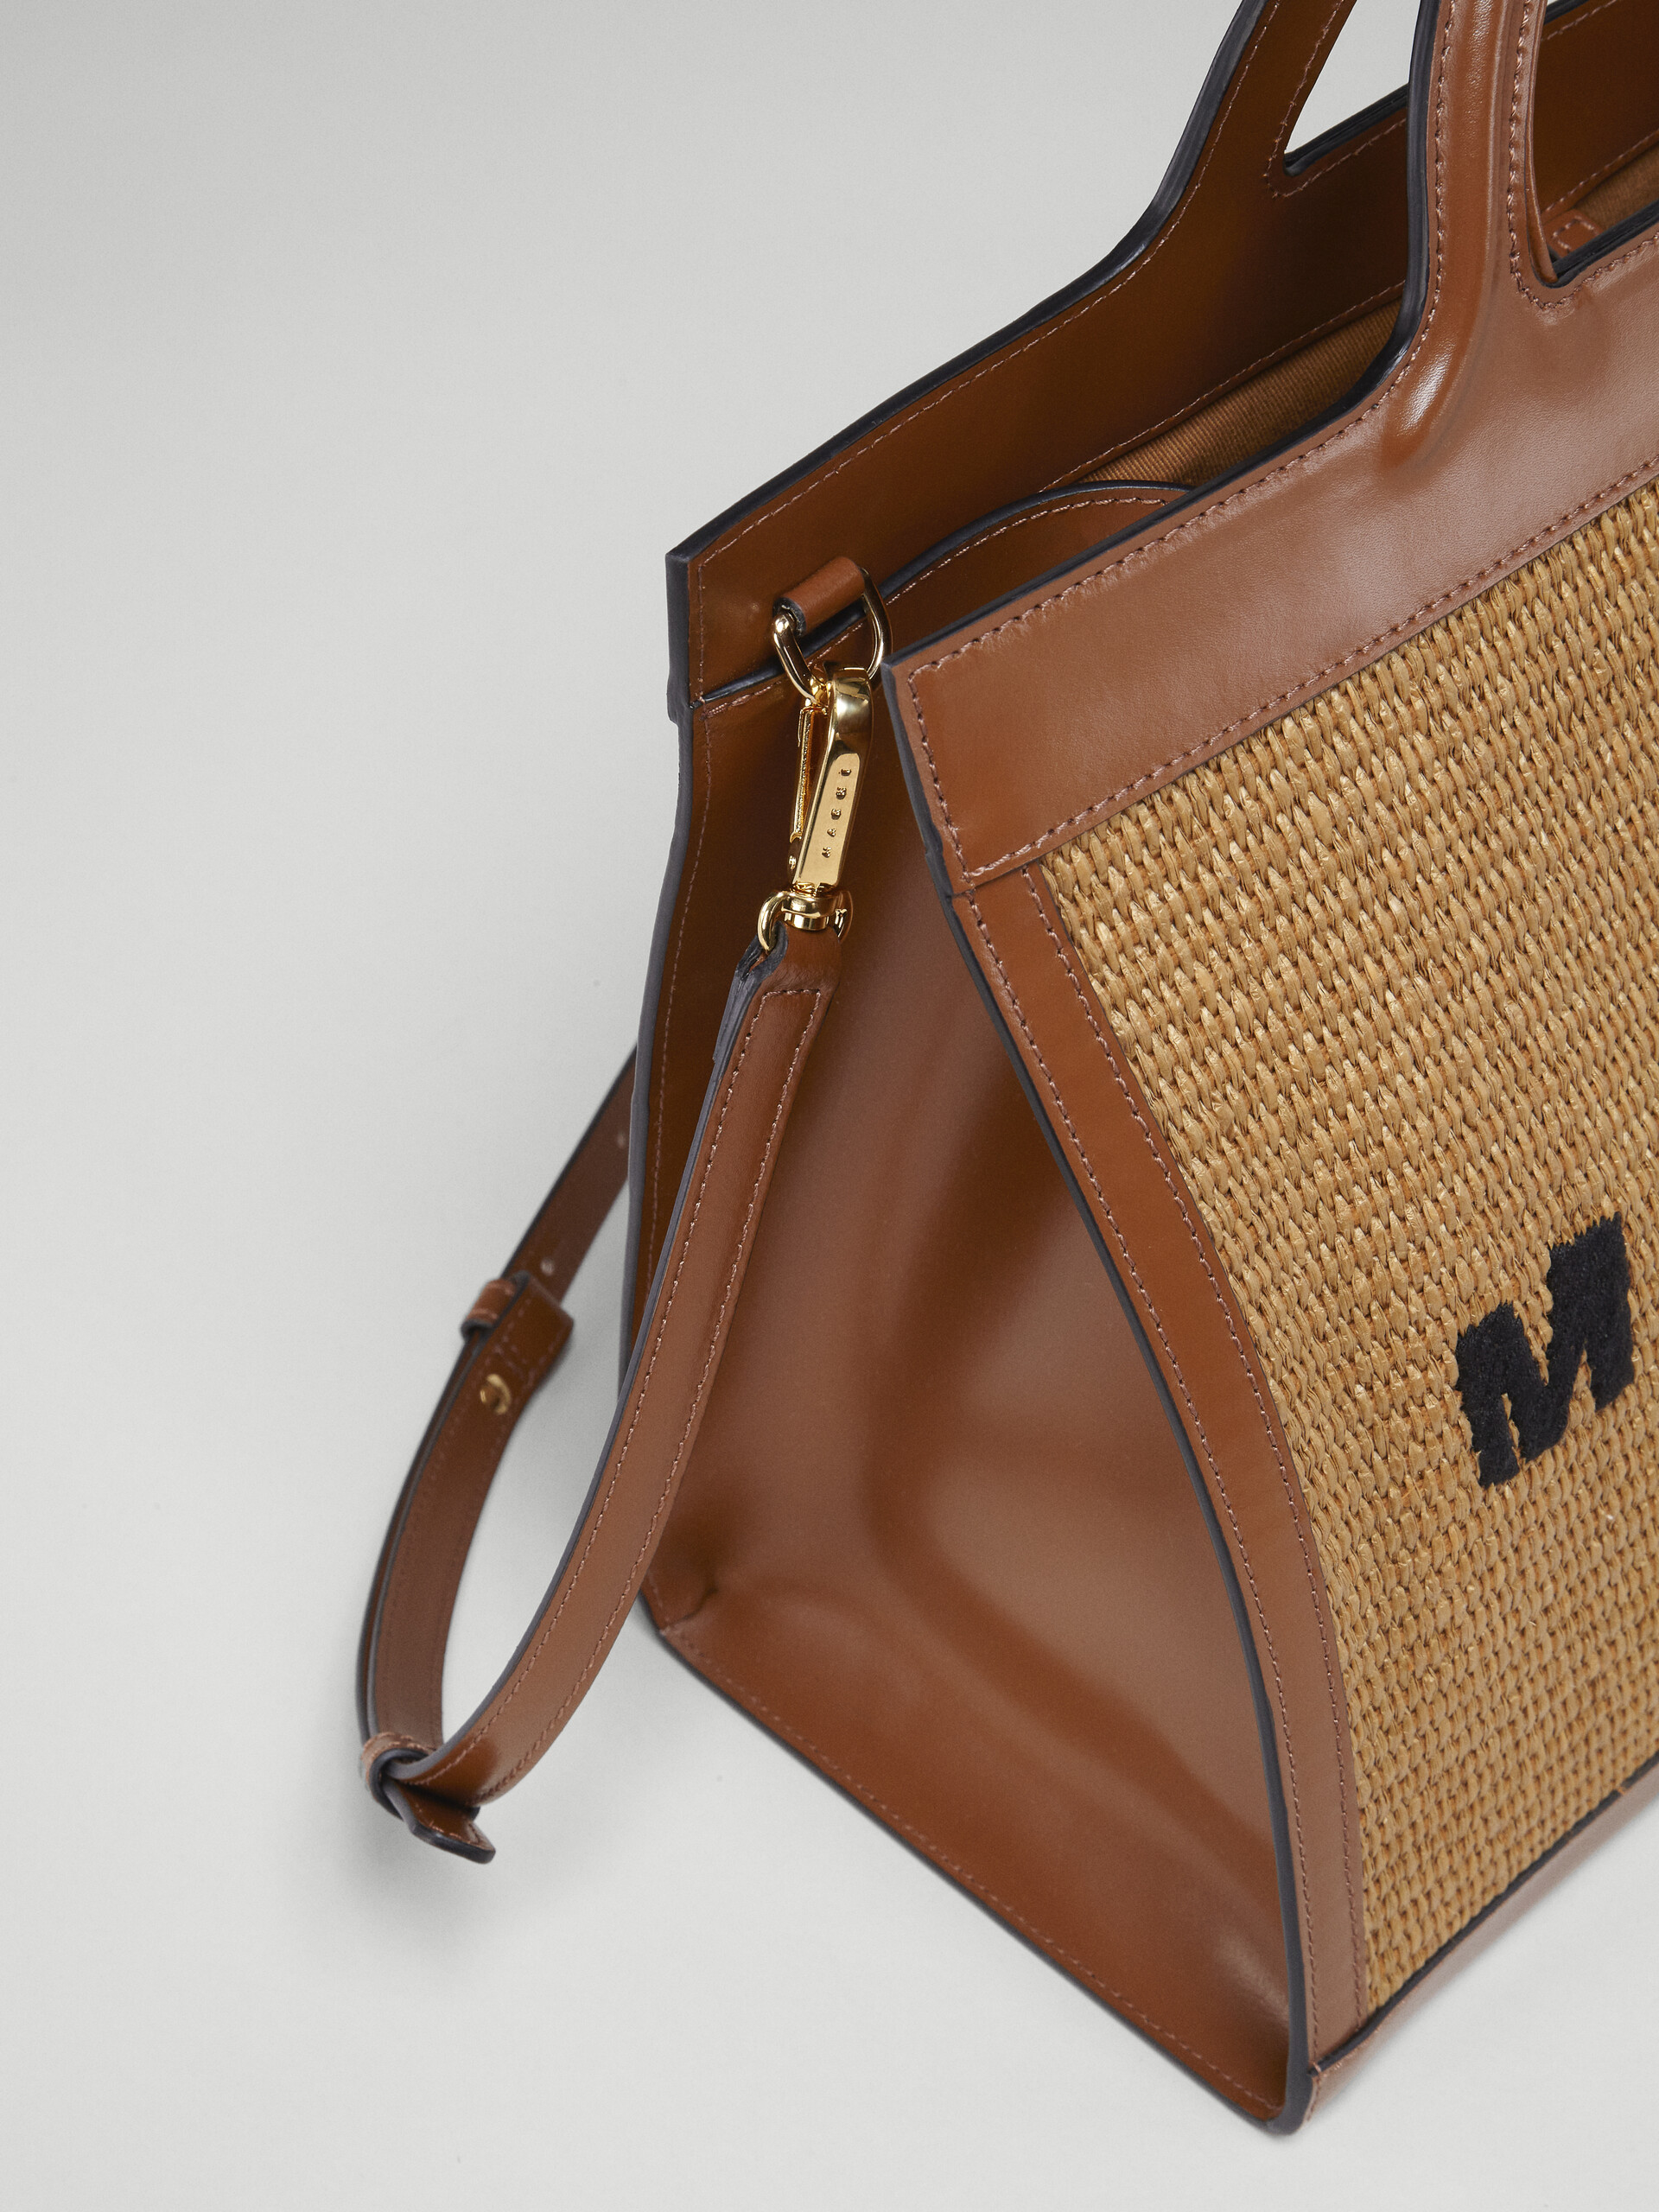 TROPICALIA tote bag in brown leather and raffia - Handbag - Image 4